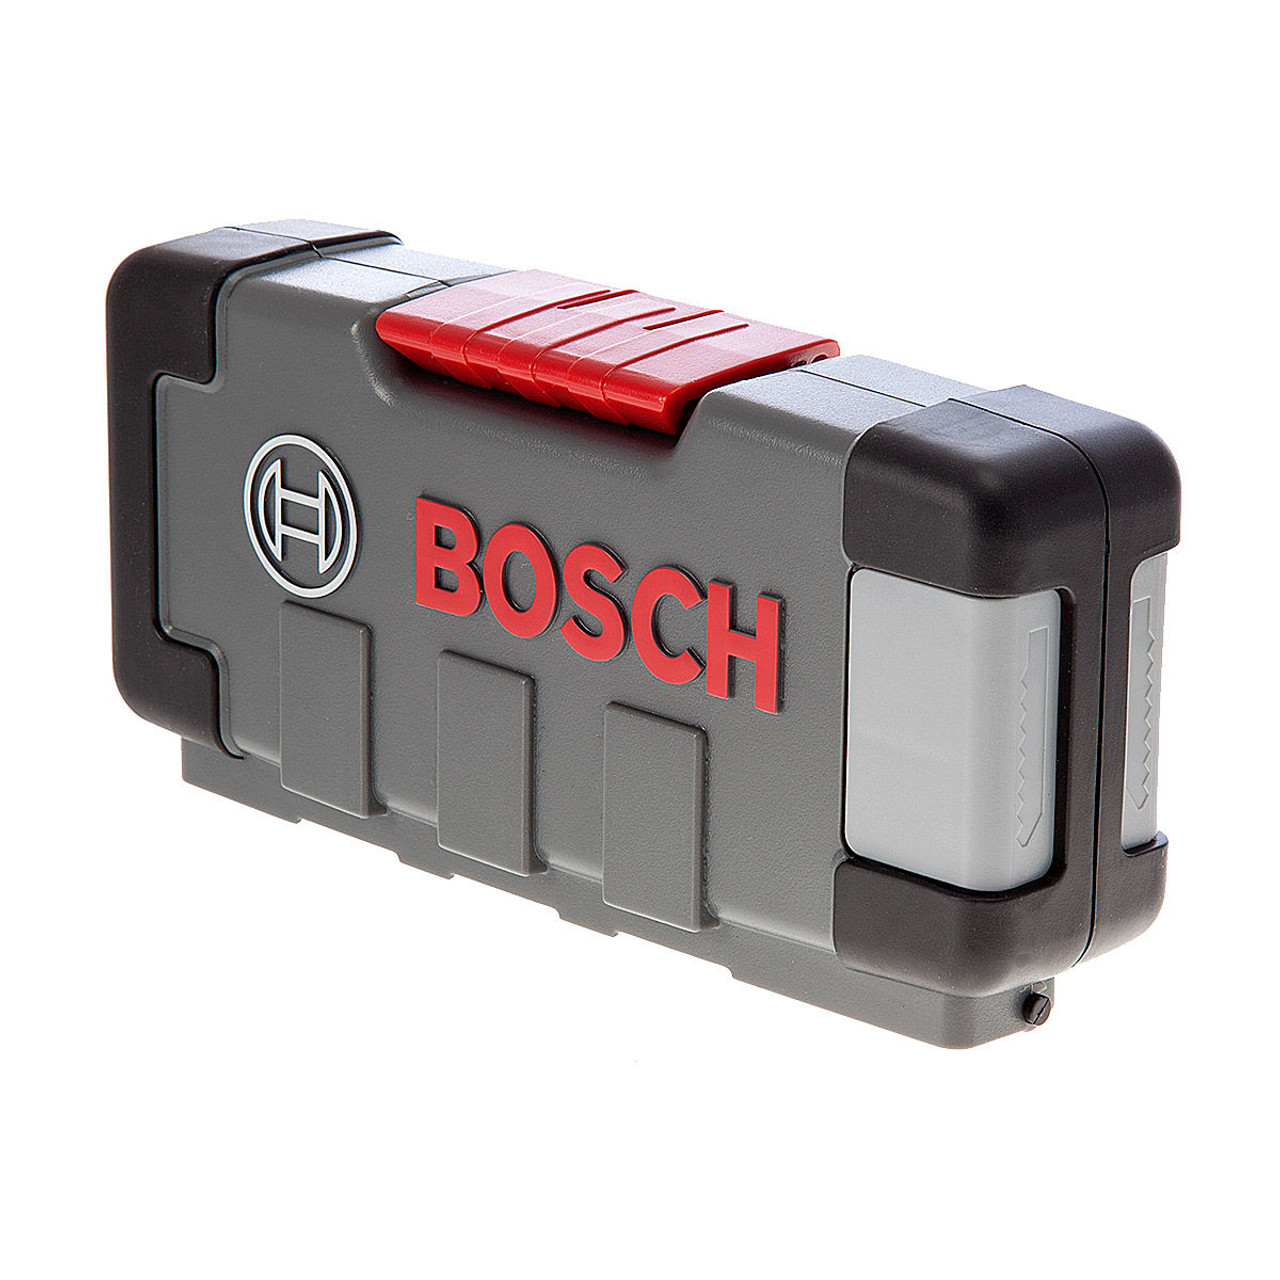 Bosch Recip Saw Blades for Wood / Metal Tough Box